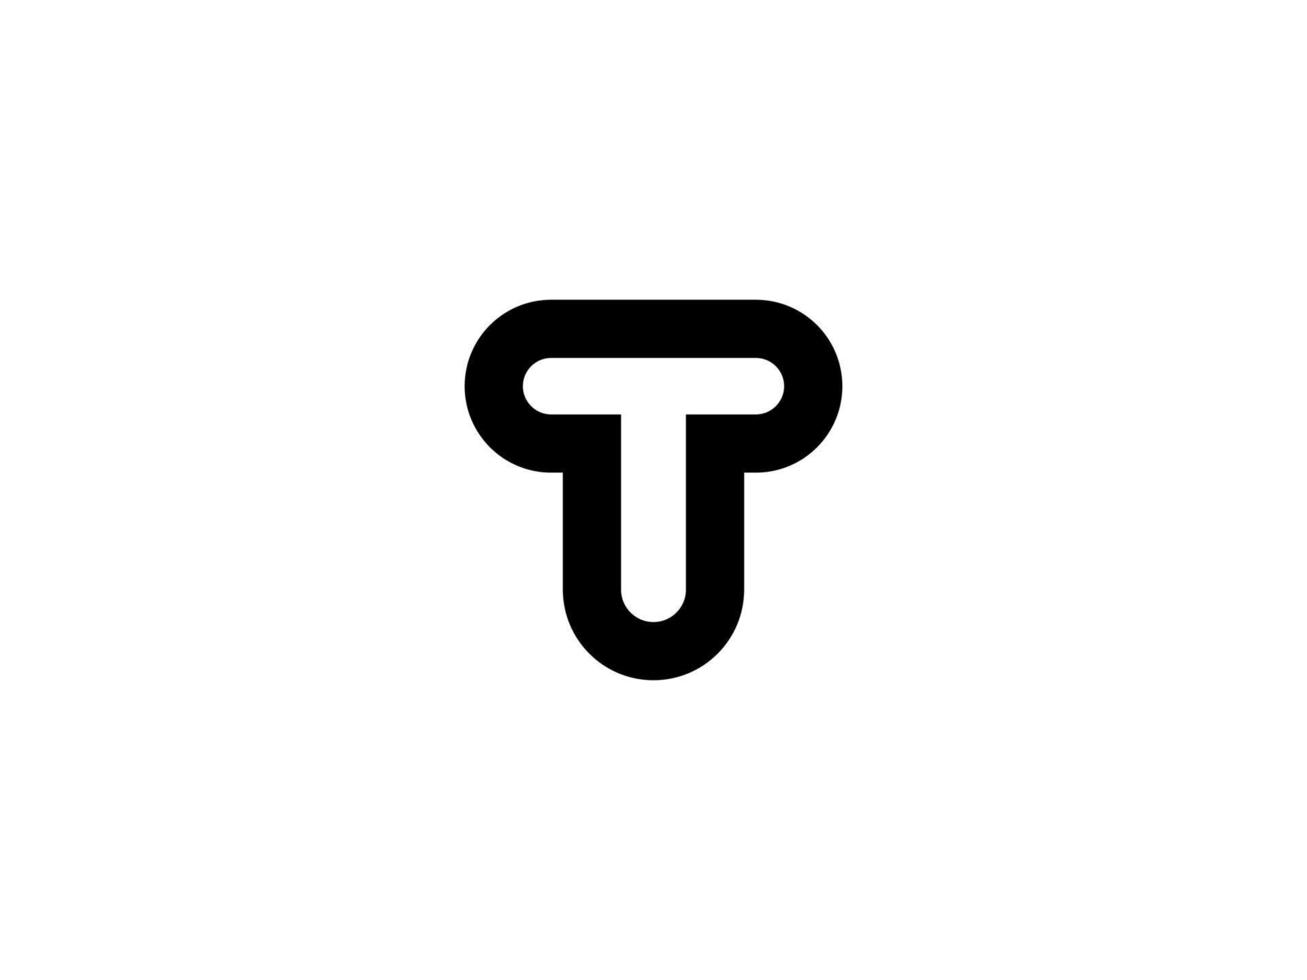 T logo design free vector file.